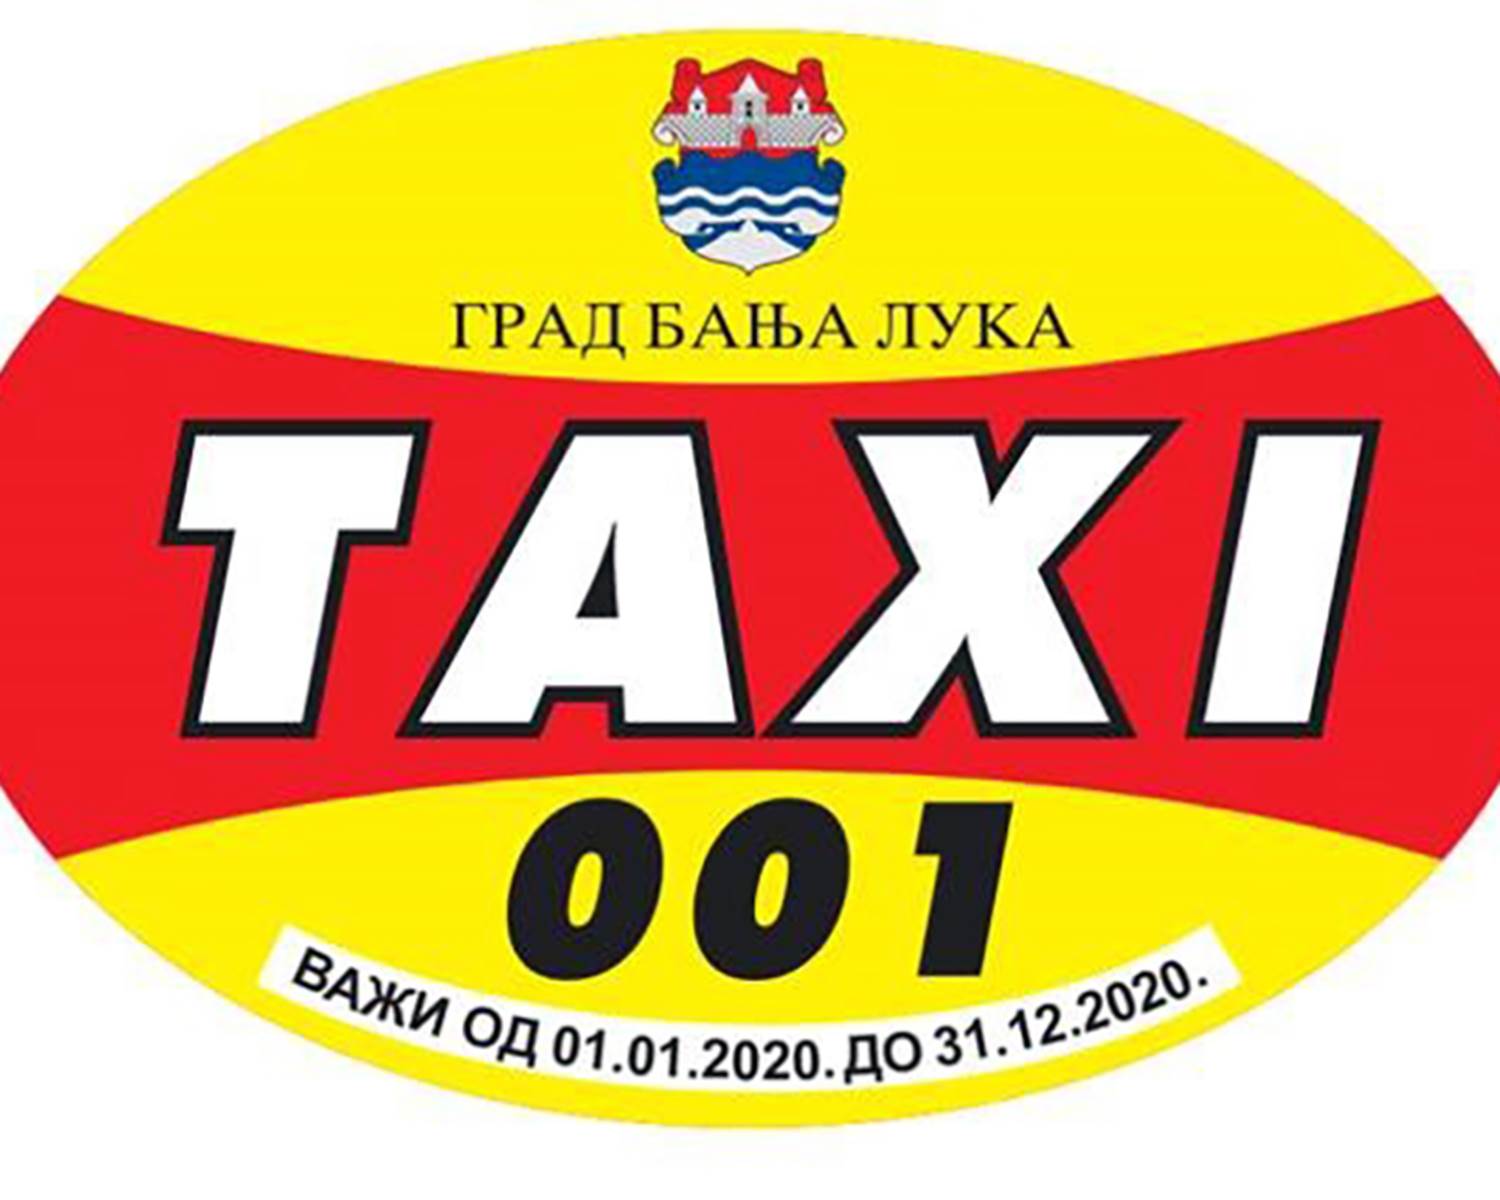  Banjaluka uvela naljepnice za taksi vozila 